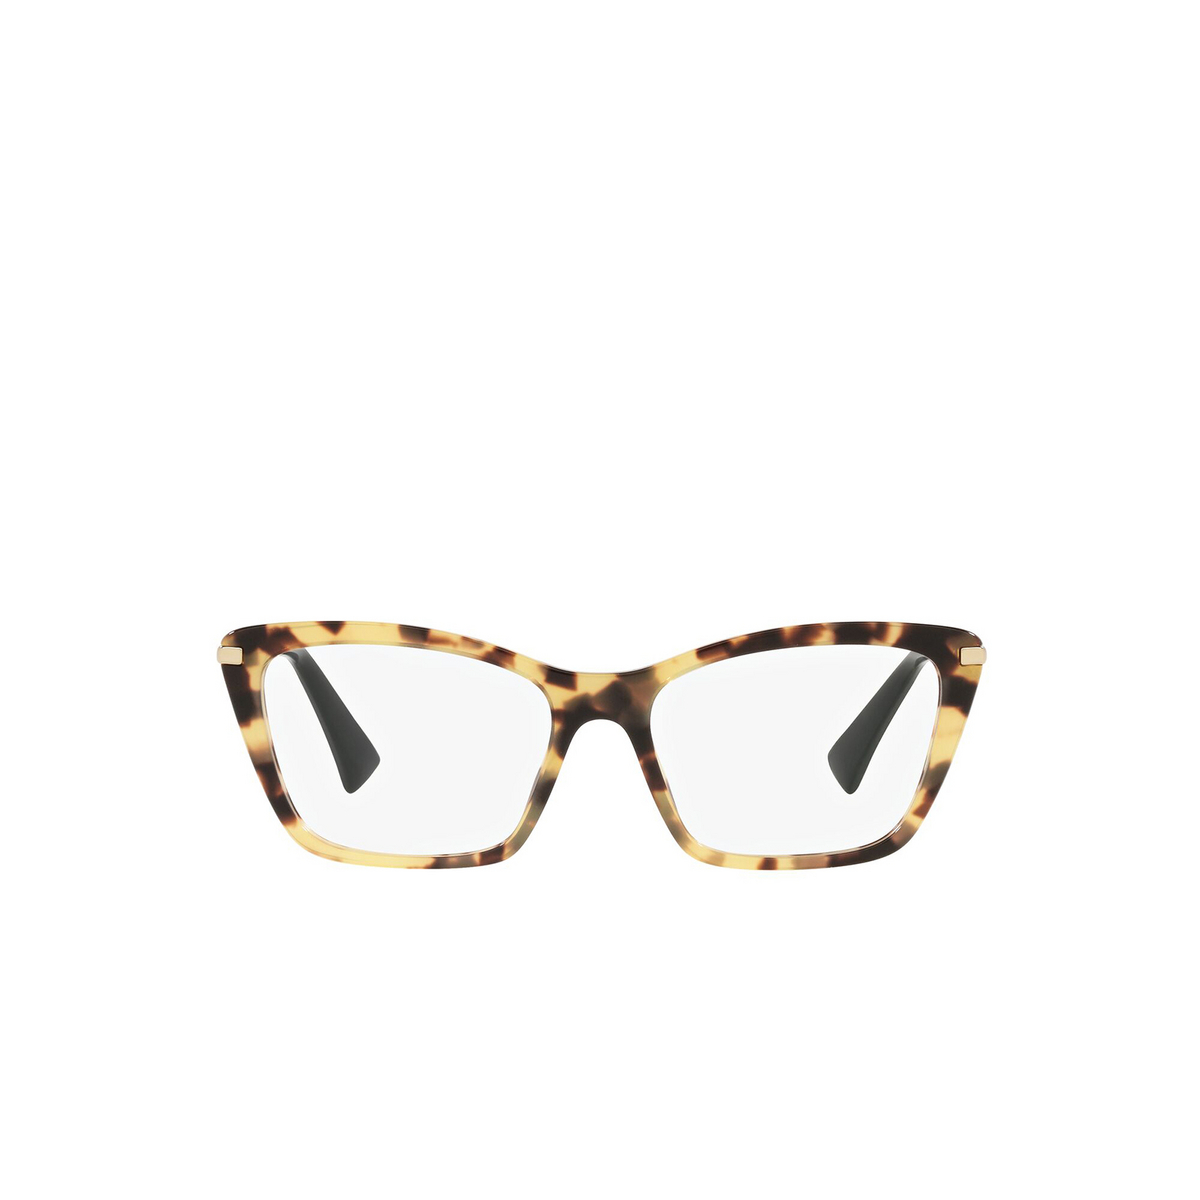 Miu Miu® Cat-eye Eyeglasses: MU 01UV color Light Havana 7S01O1 - front view.